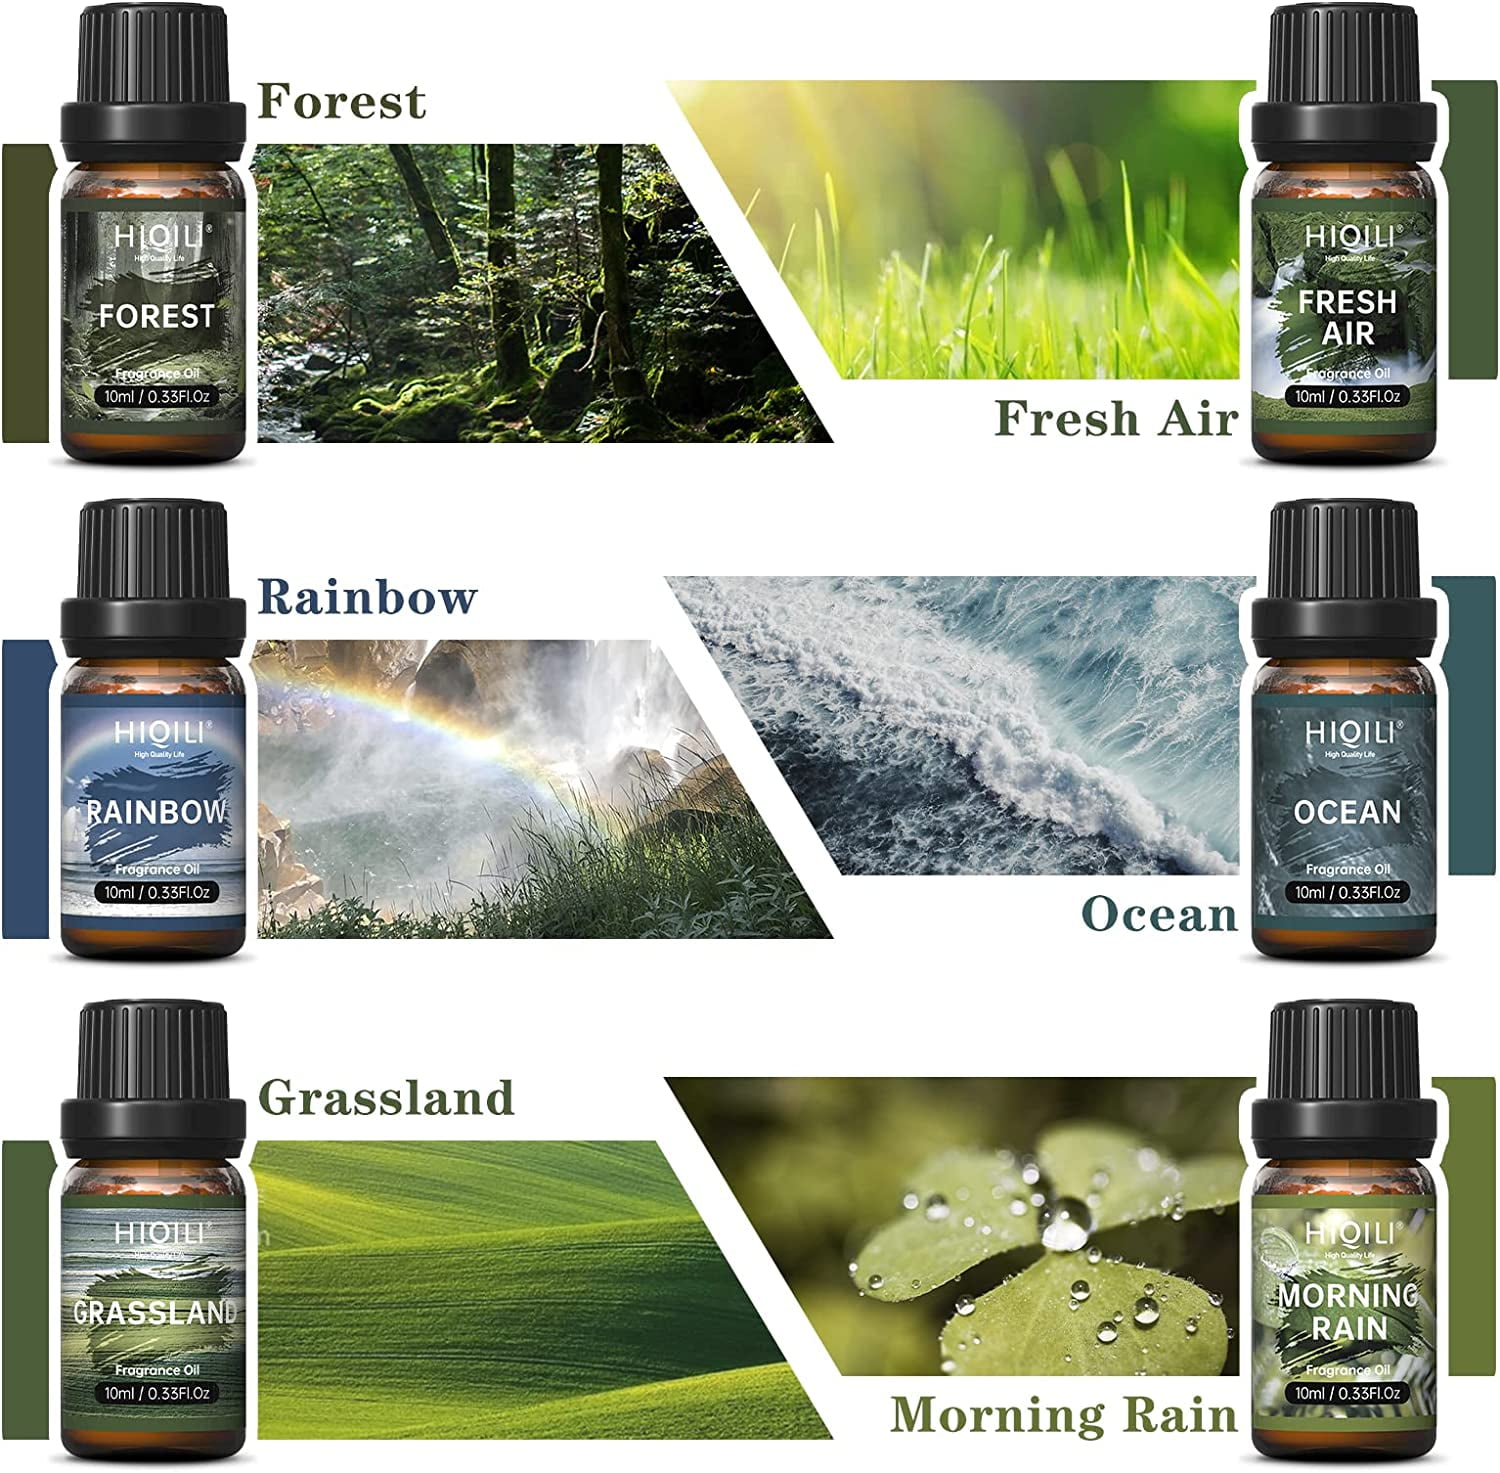 Essential Academy] HiQiLi Vanilla Essential Oil Natural Aromatherapy  Therapeutic Grade Diffusion Massage Oil Bathing Fragrance Oil